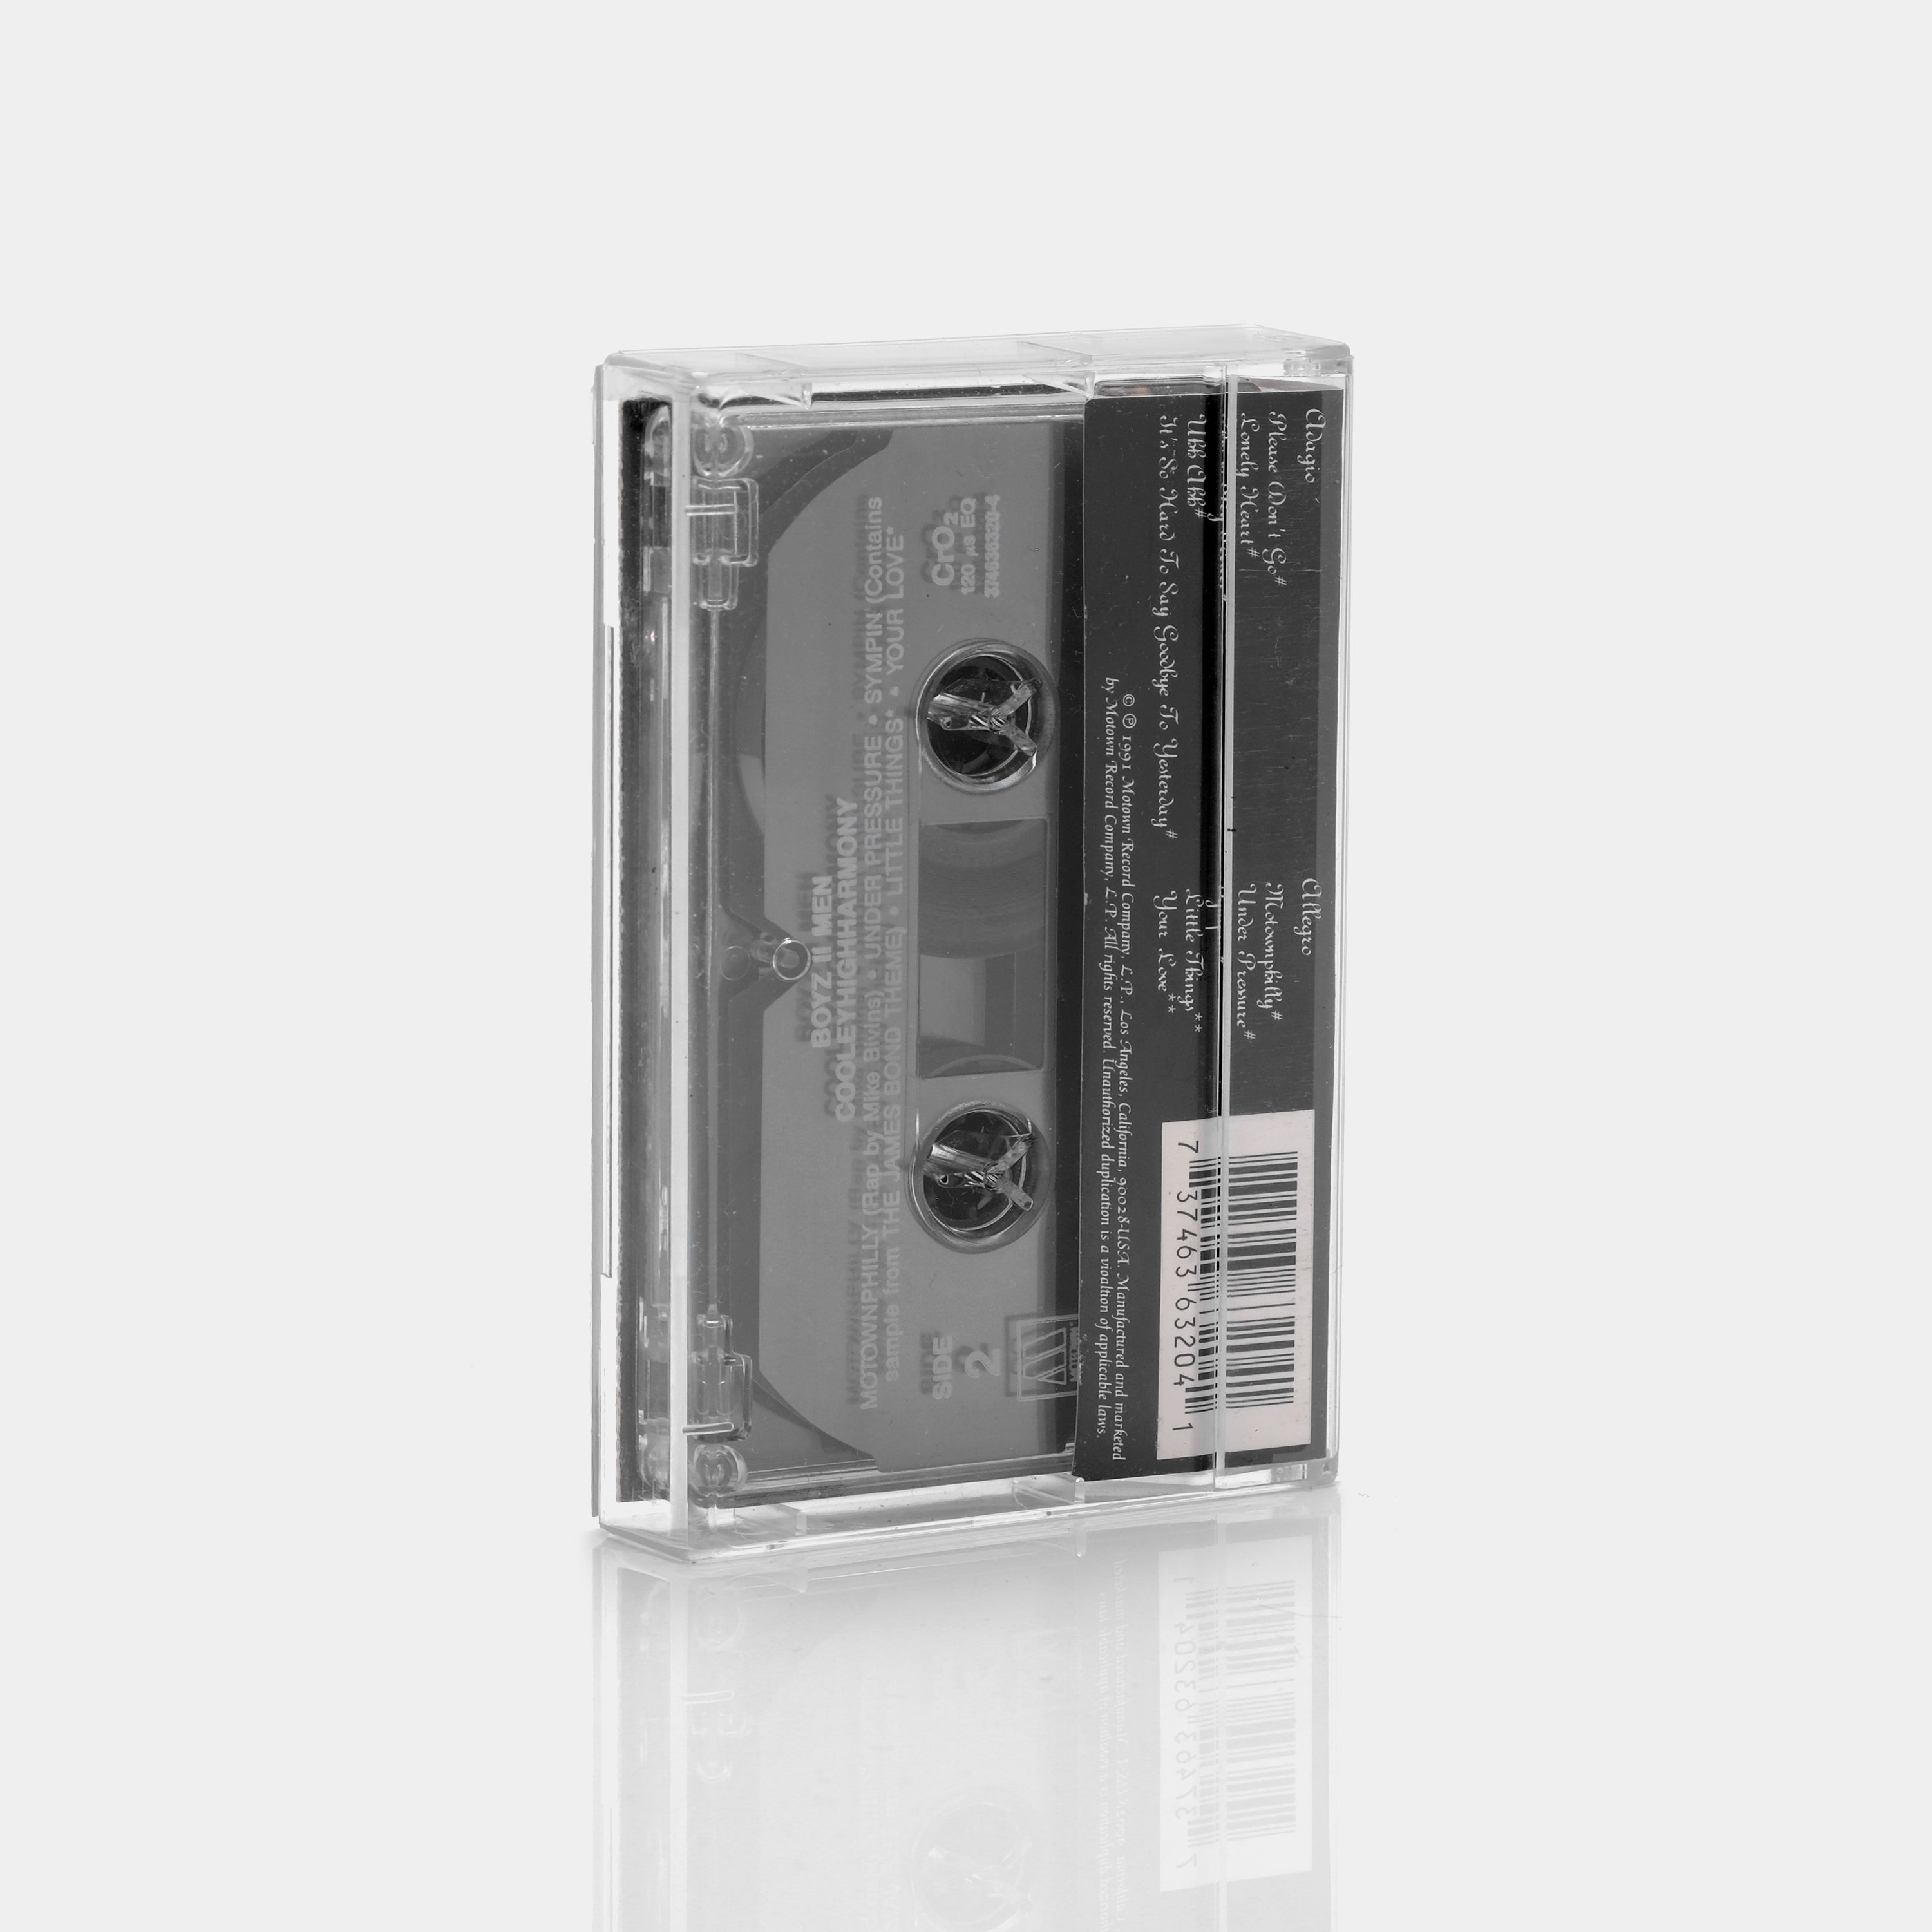 Boyz II Men - Cooleyhighharmony Cassette Tape